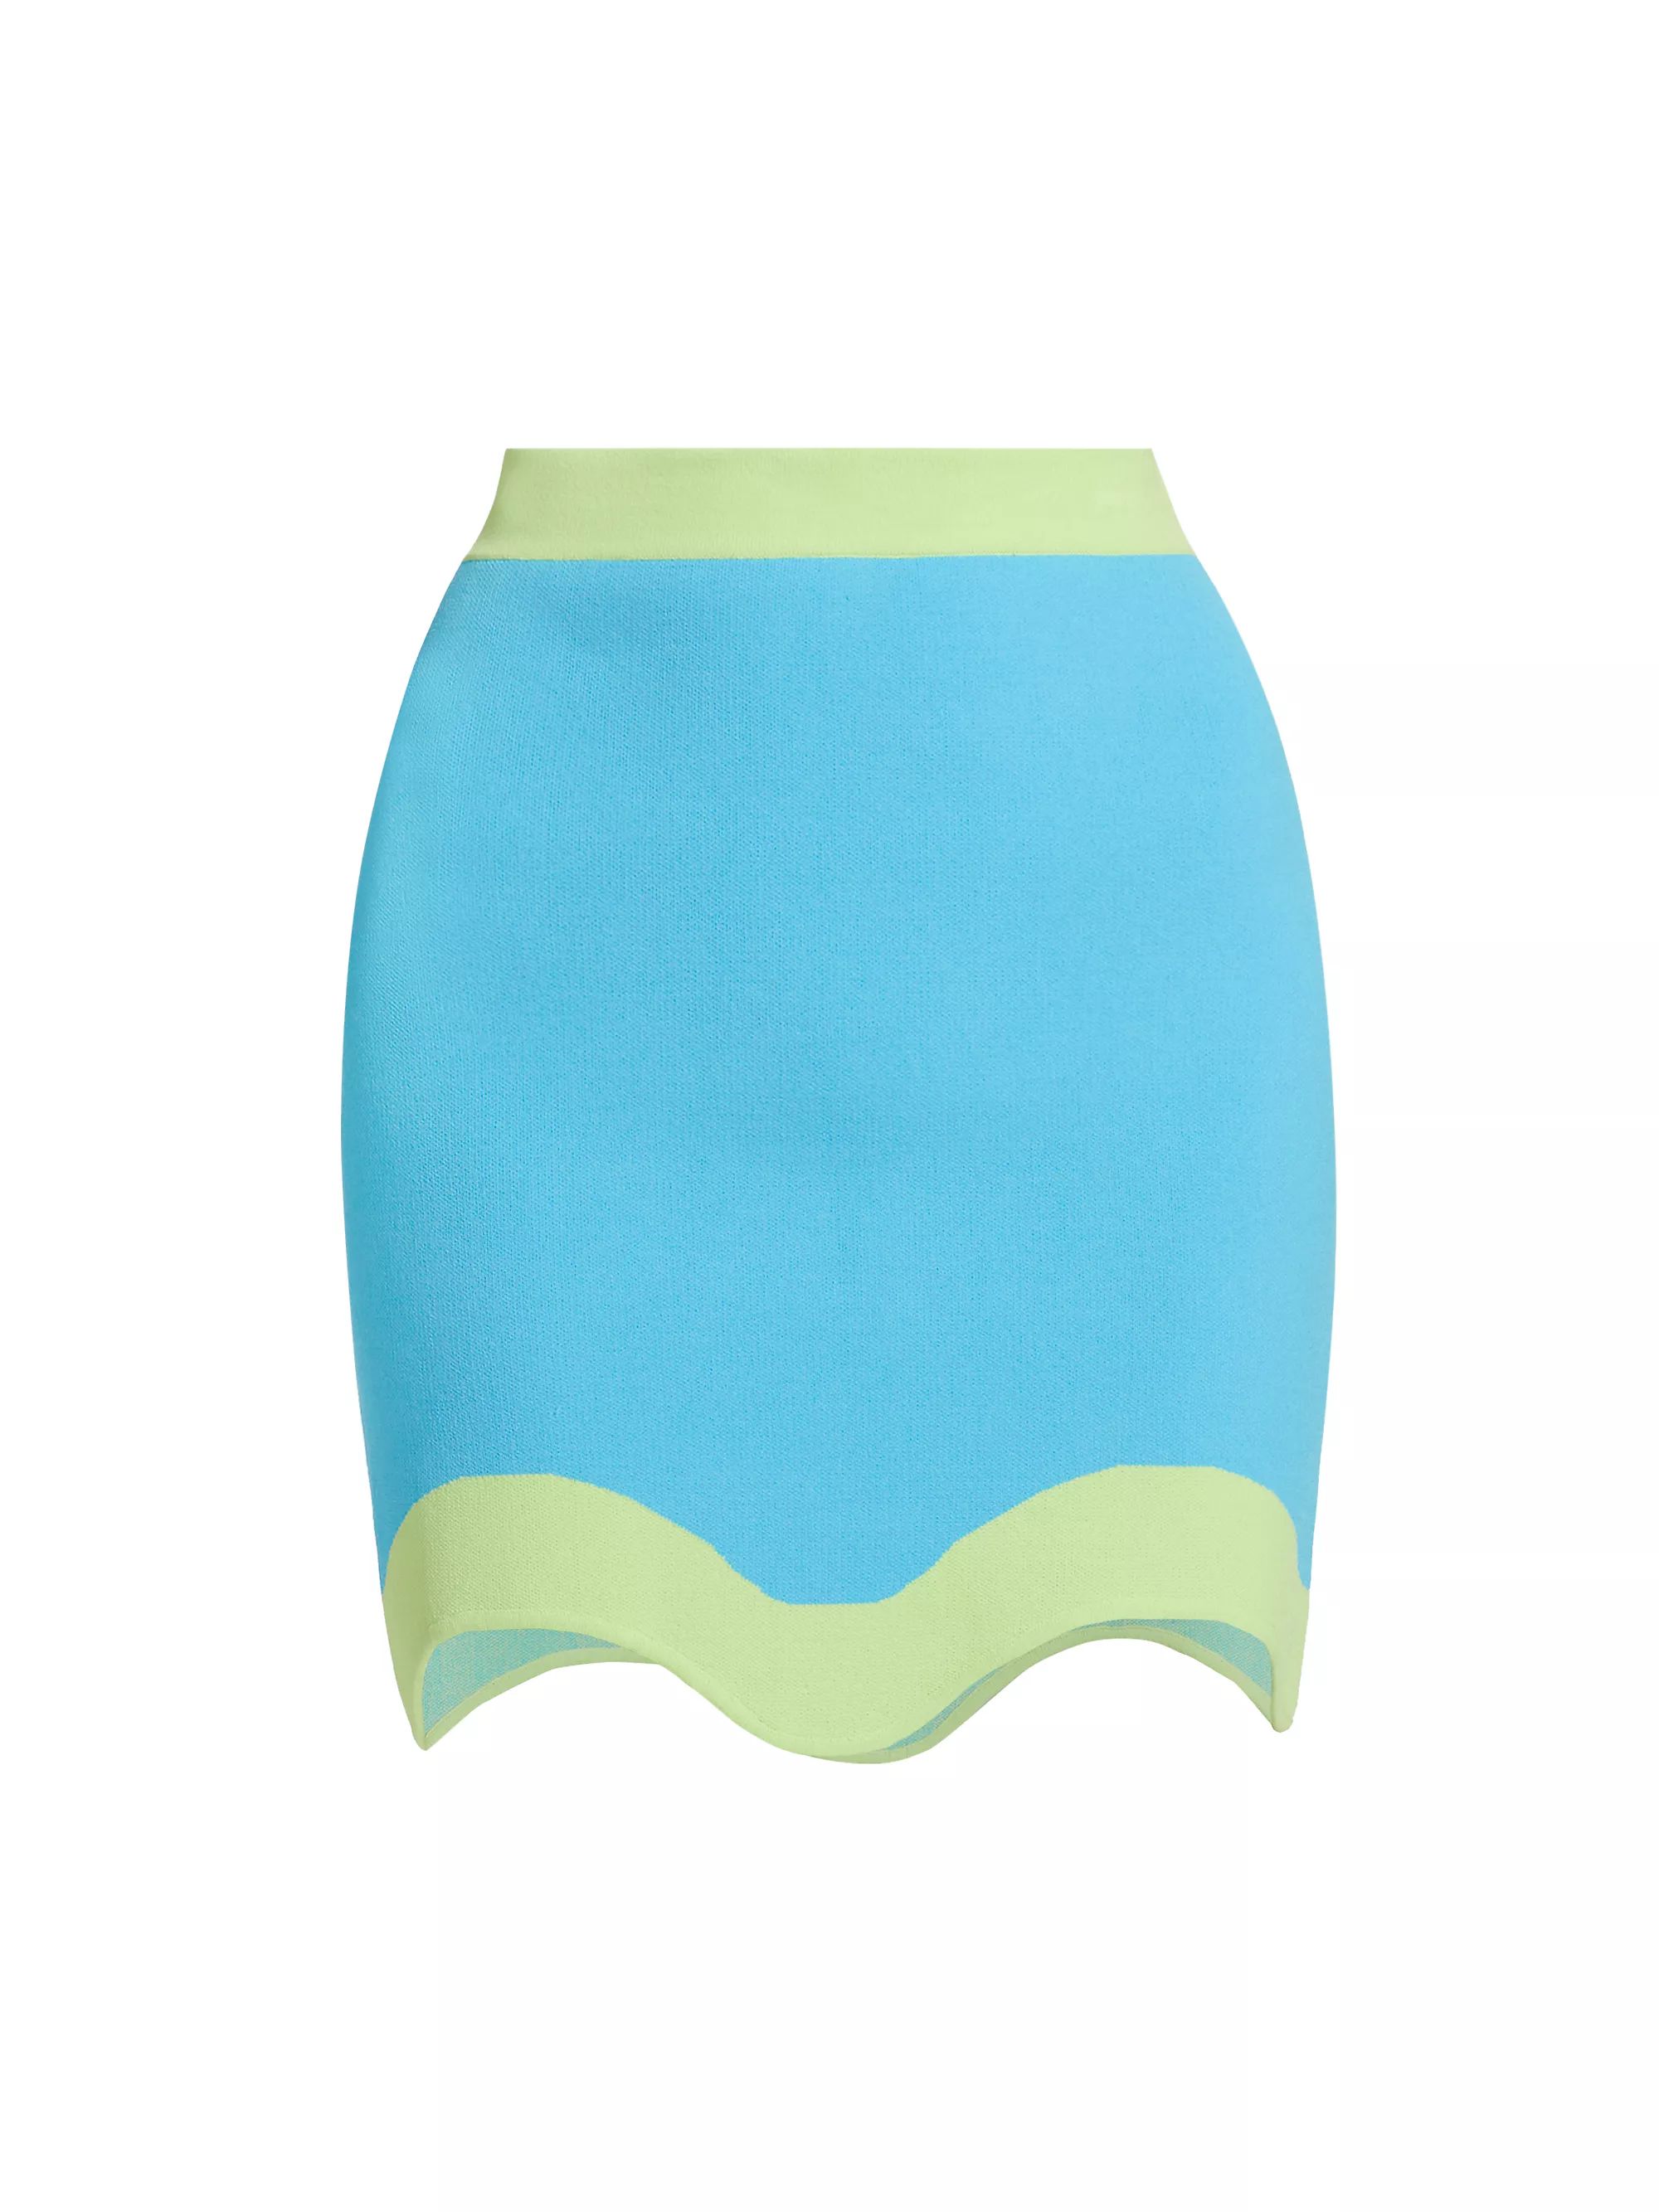 Kiwi Adonis BlueAll MiniAmurDean Knit Scallop-Hem Miniskirt$248
            
          20% Off $2... | Saks Fifth Avenue